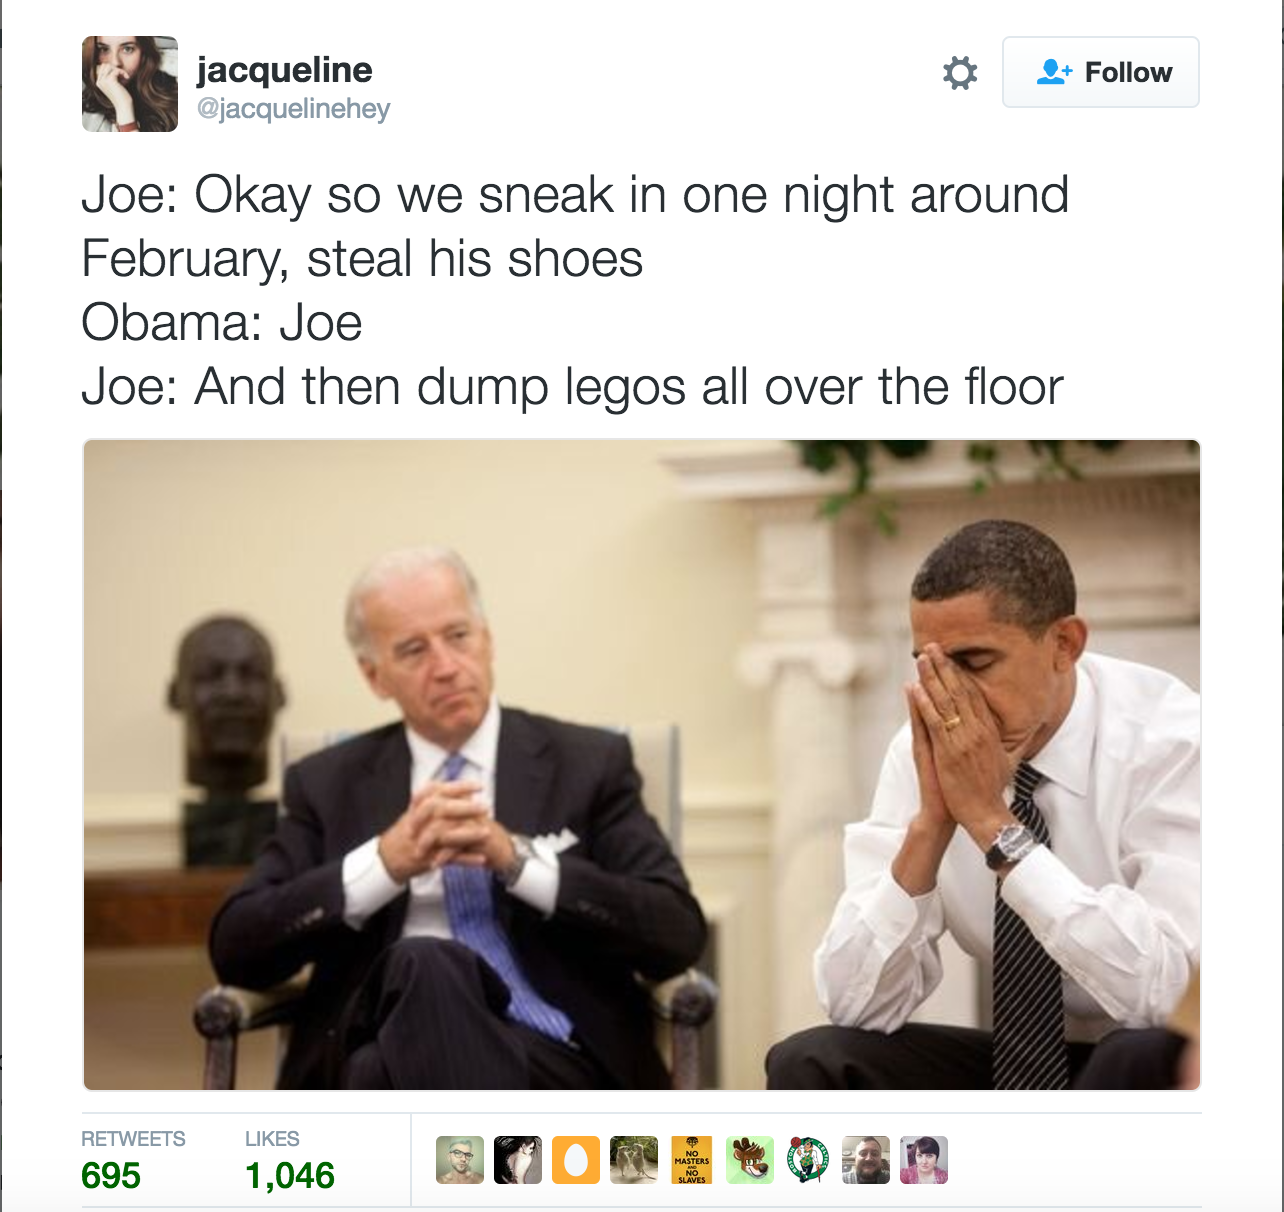 21 Joe Biden That Won the Internet and Our Hearts (Photos)